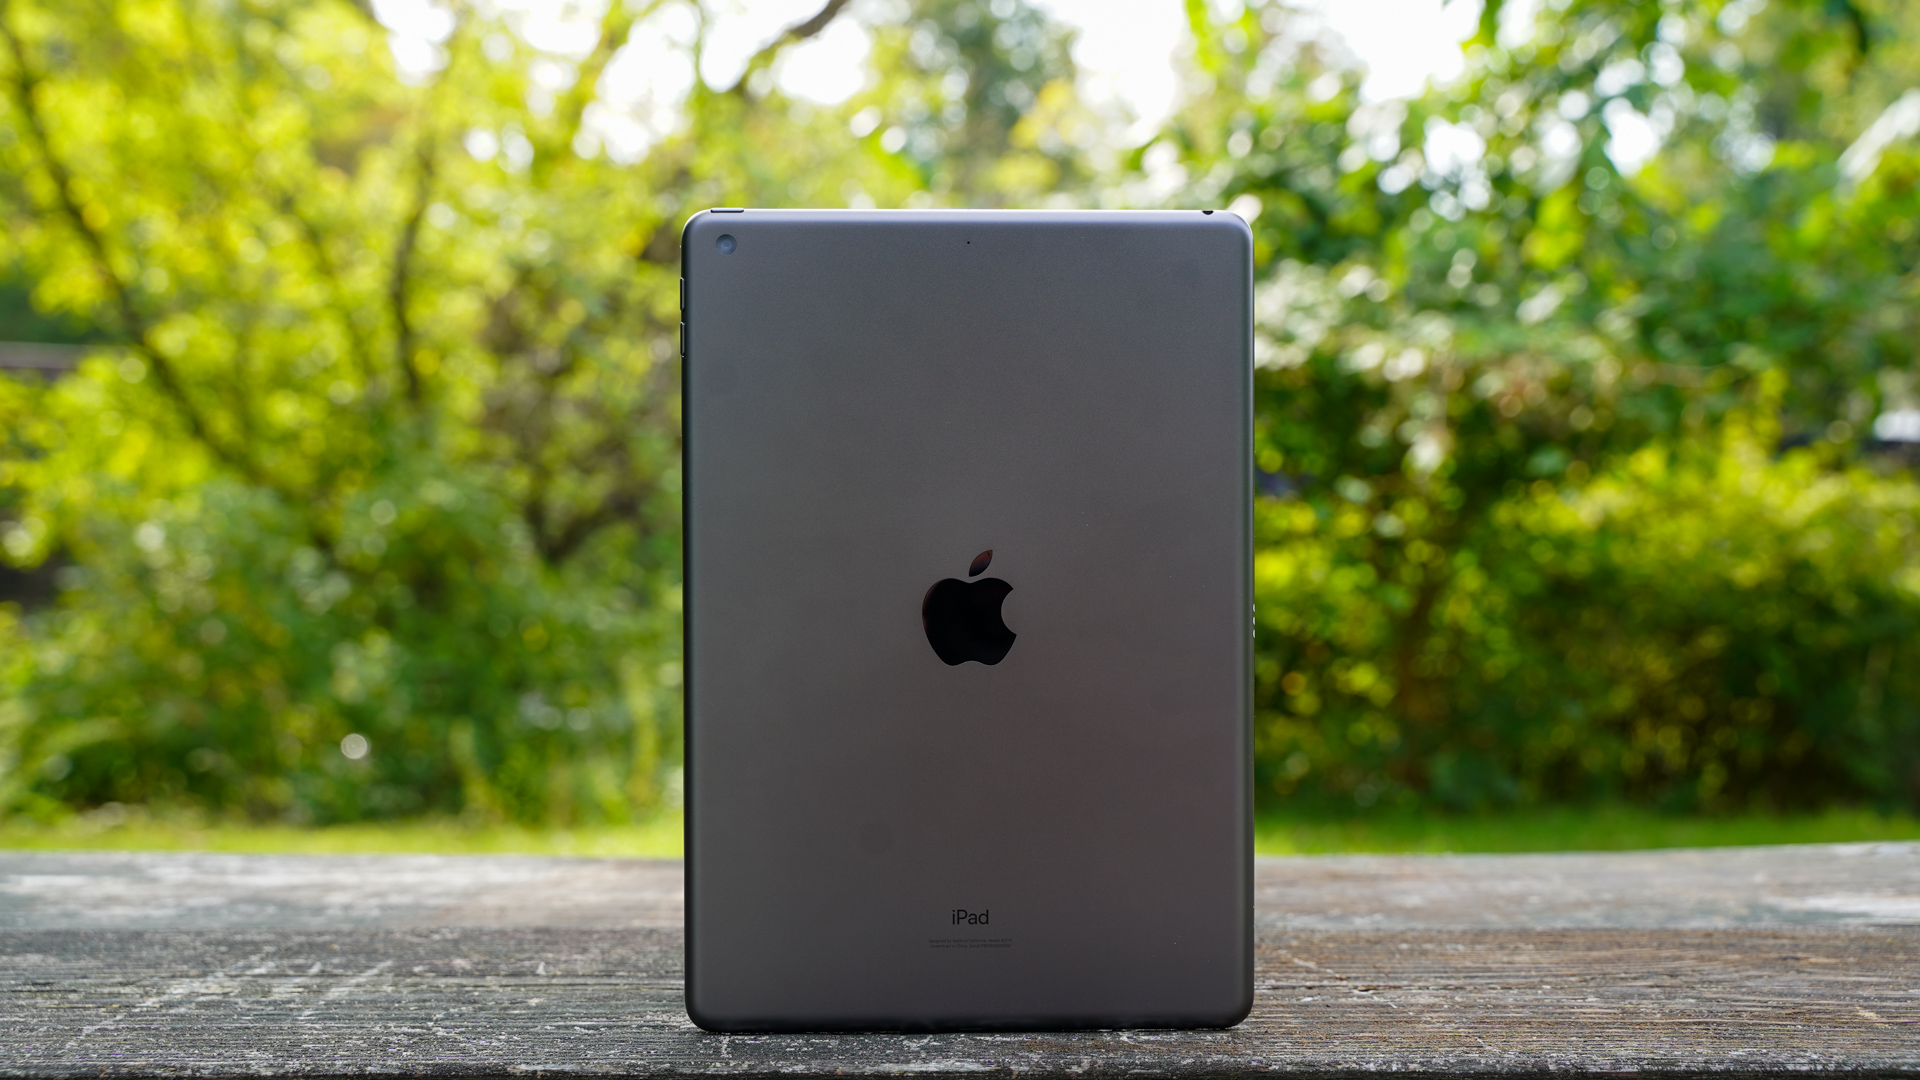 Apple iPad 2020 rear panel